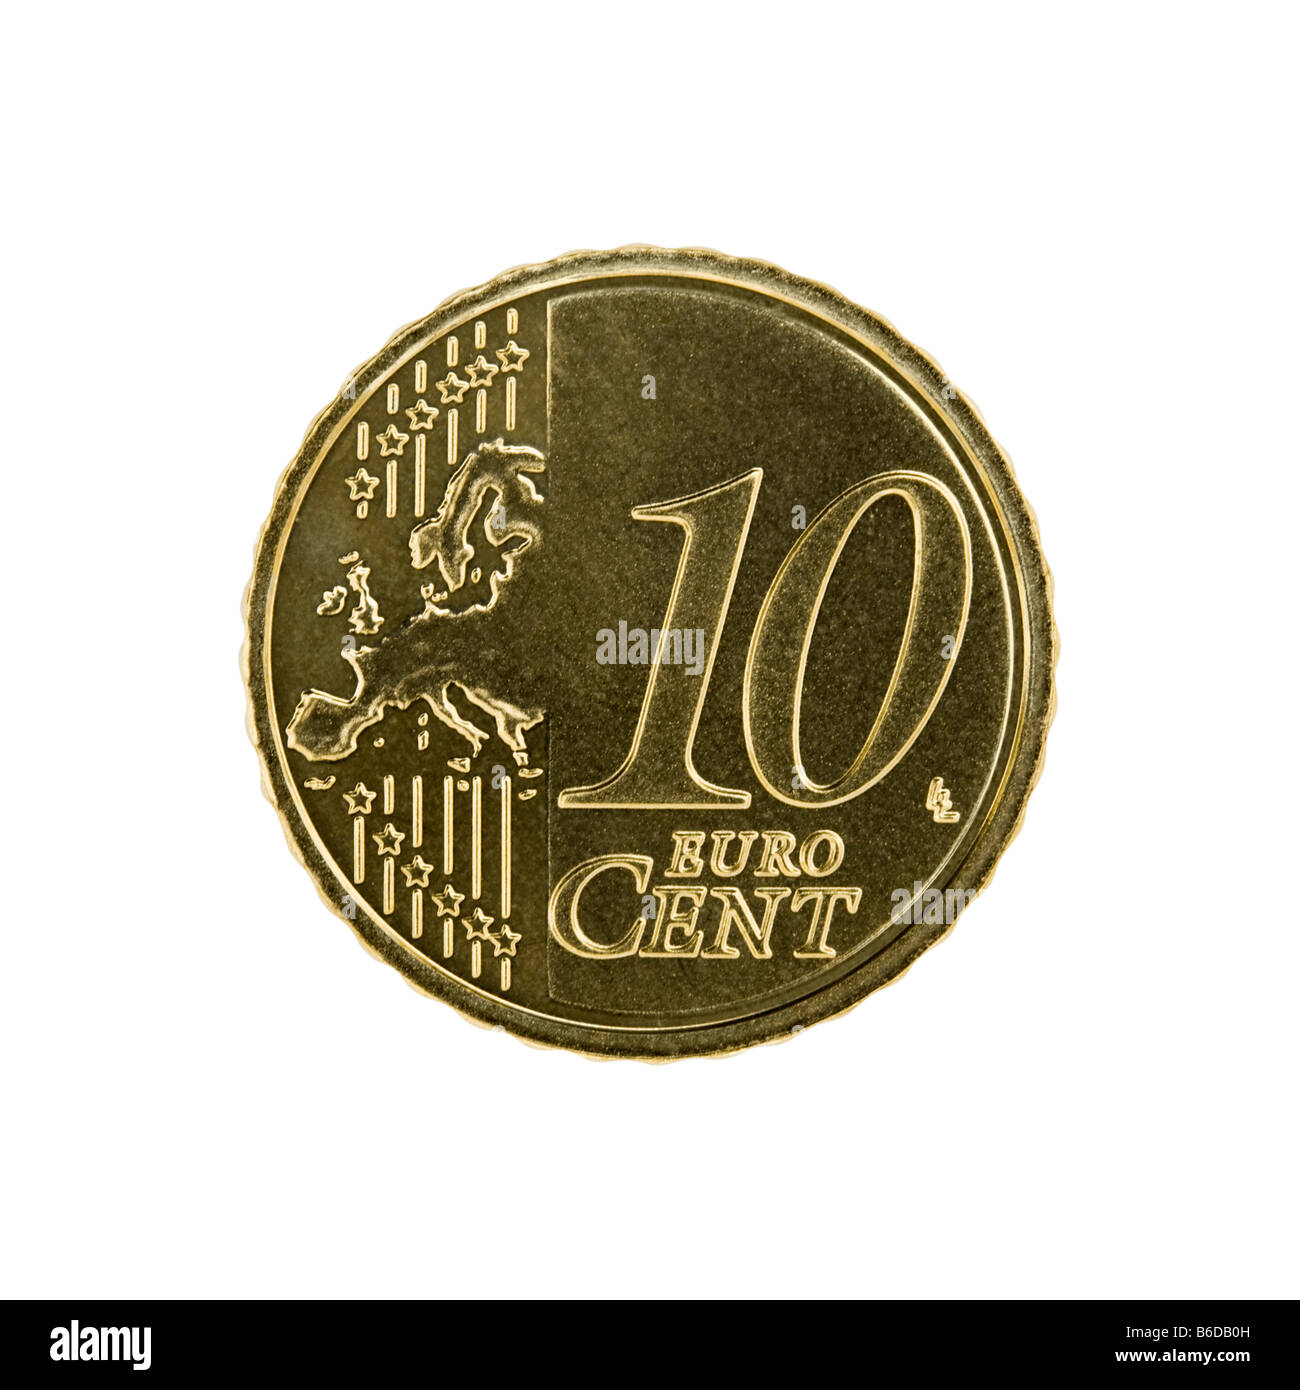 10 Euro cent coin Stock Photo - Alamy